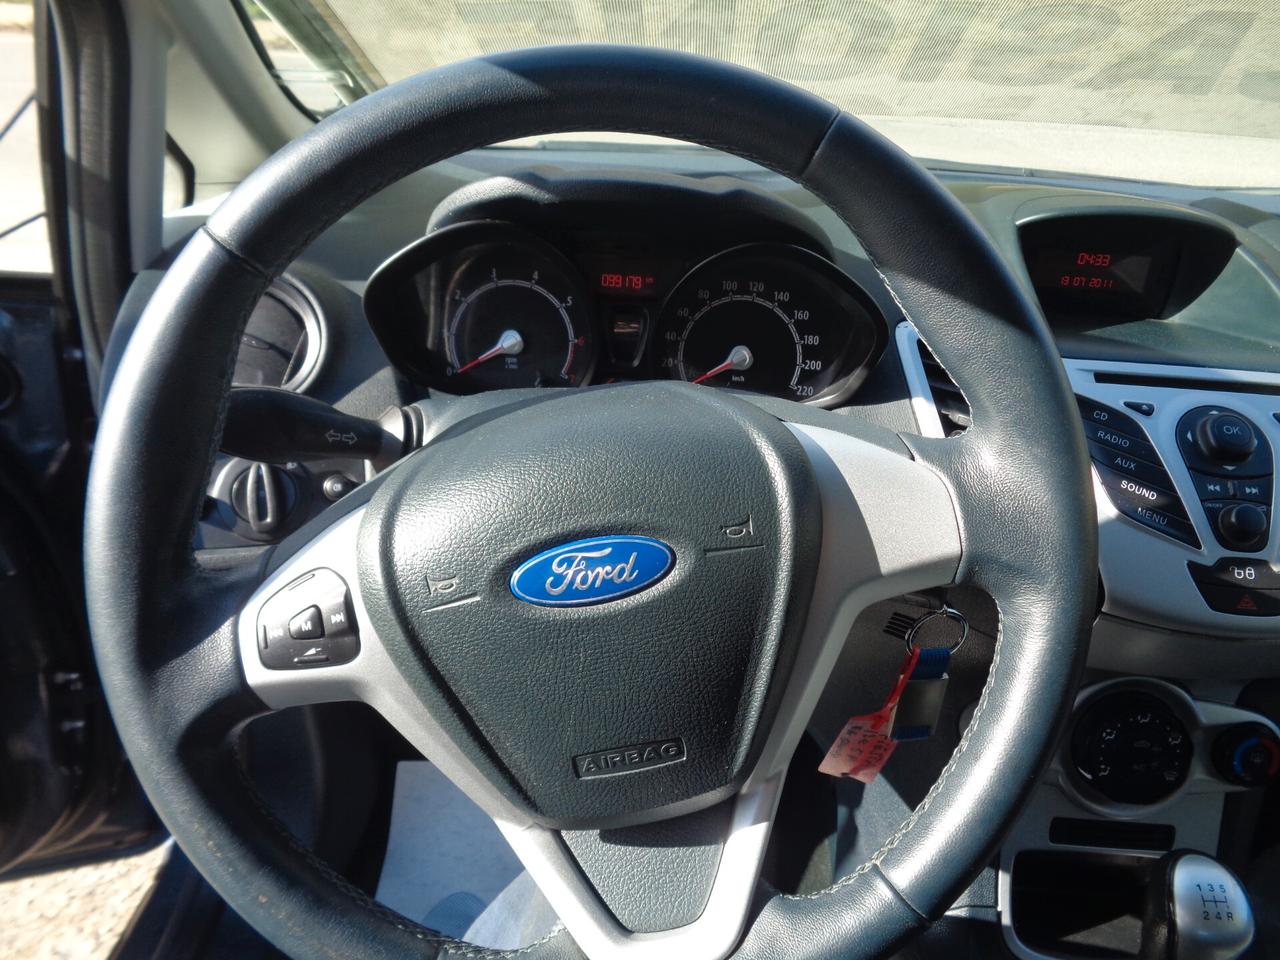 Ford Fiesta 1.2 60CV 5p. Tit. da vetrina